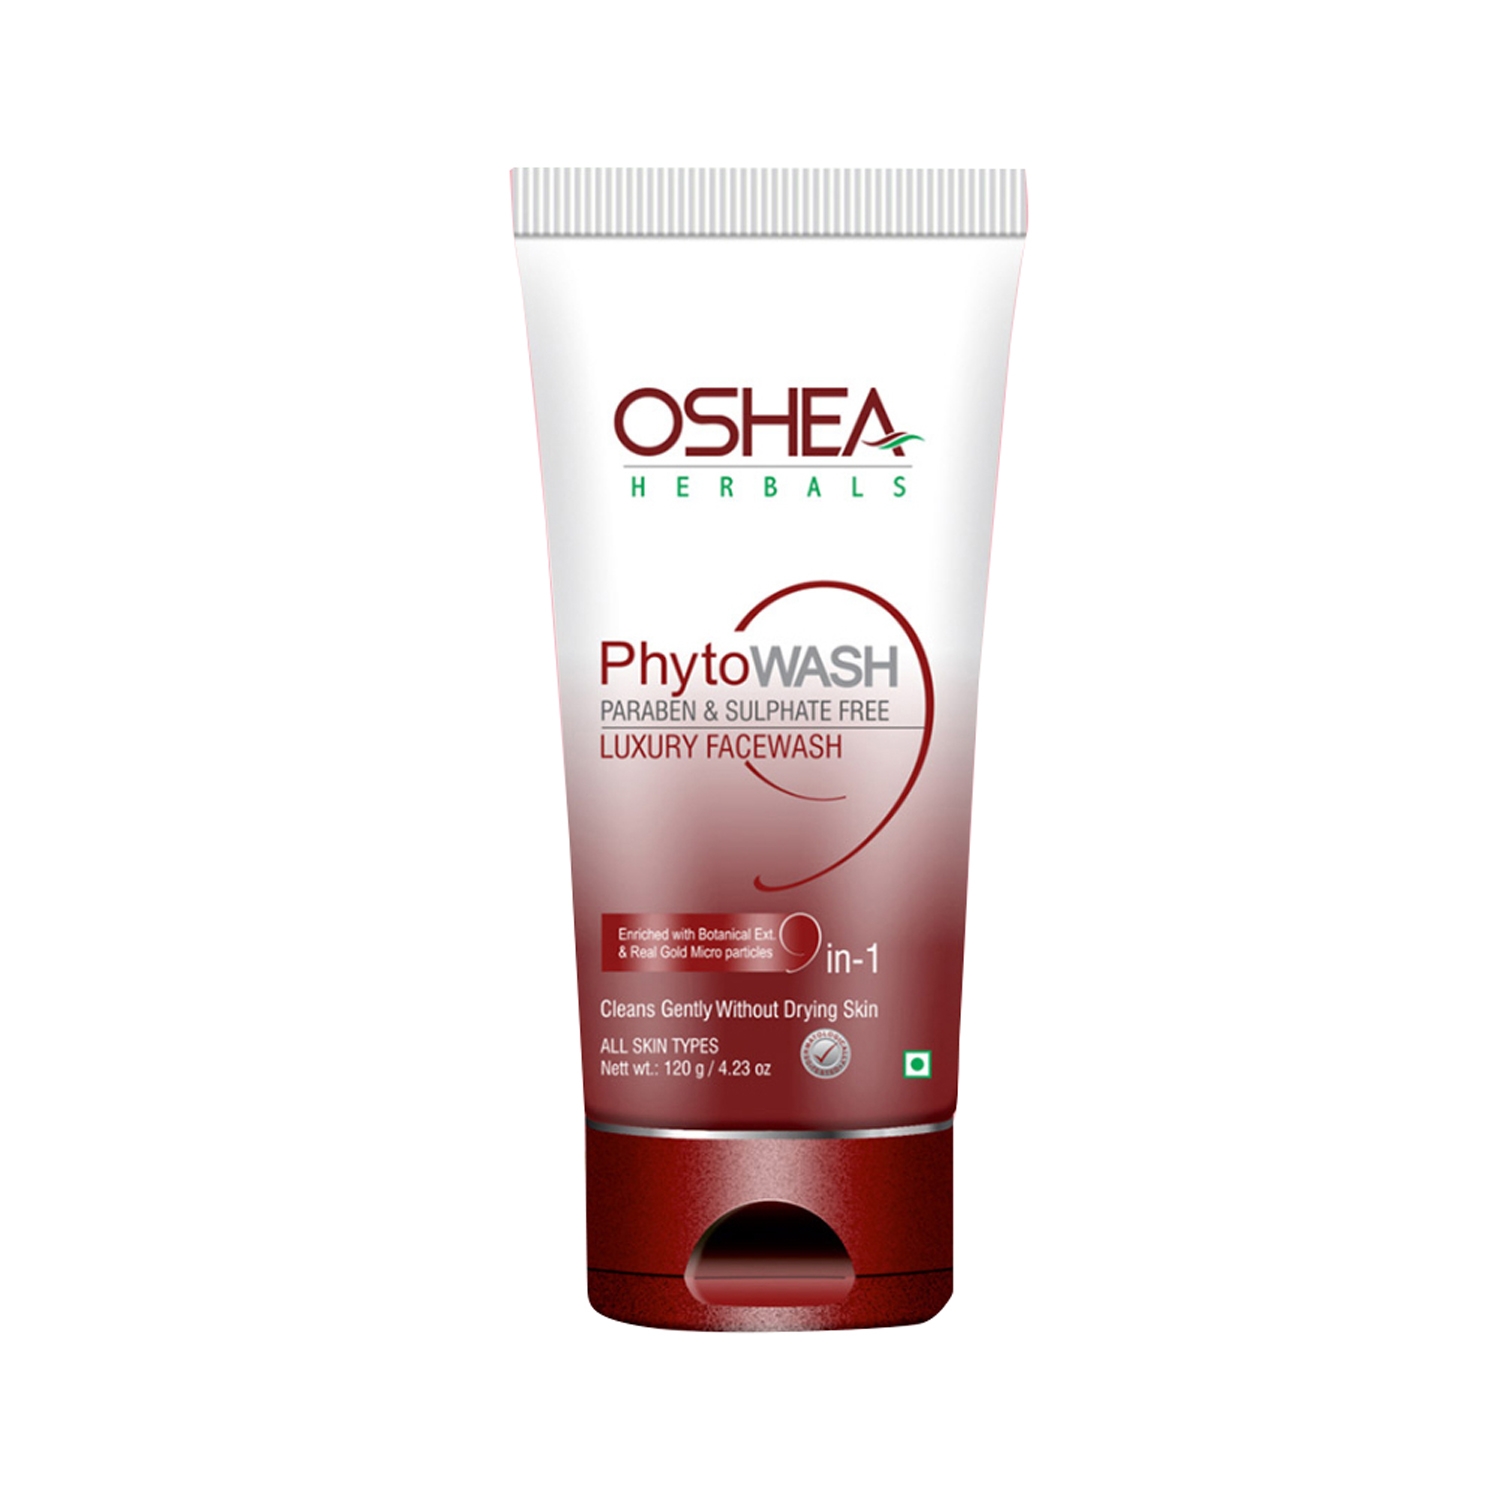 Oshea Herbals Phytowash Luxury Face Wash (120g)